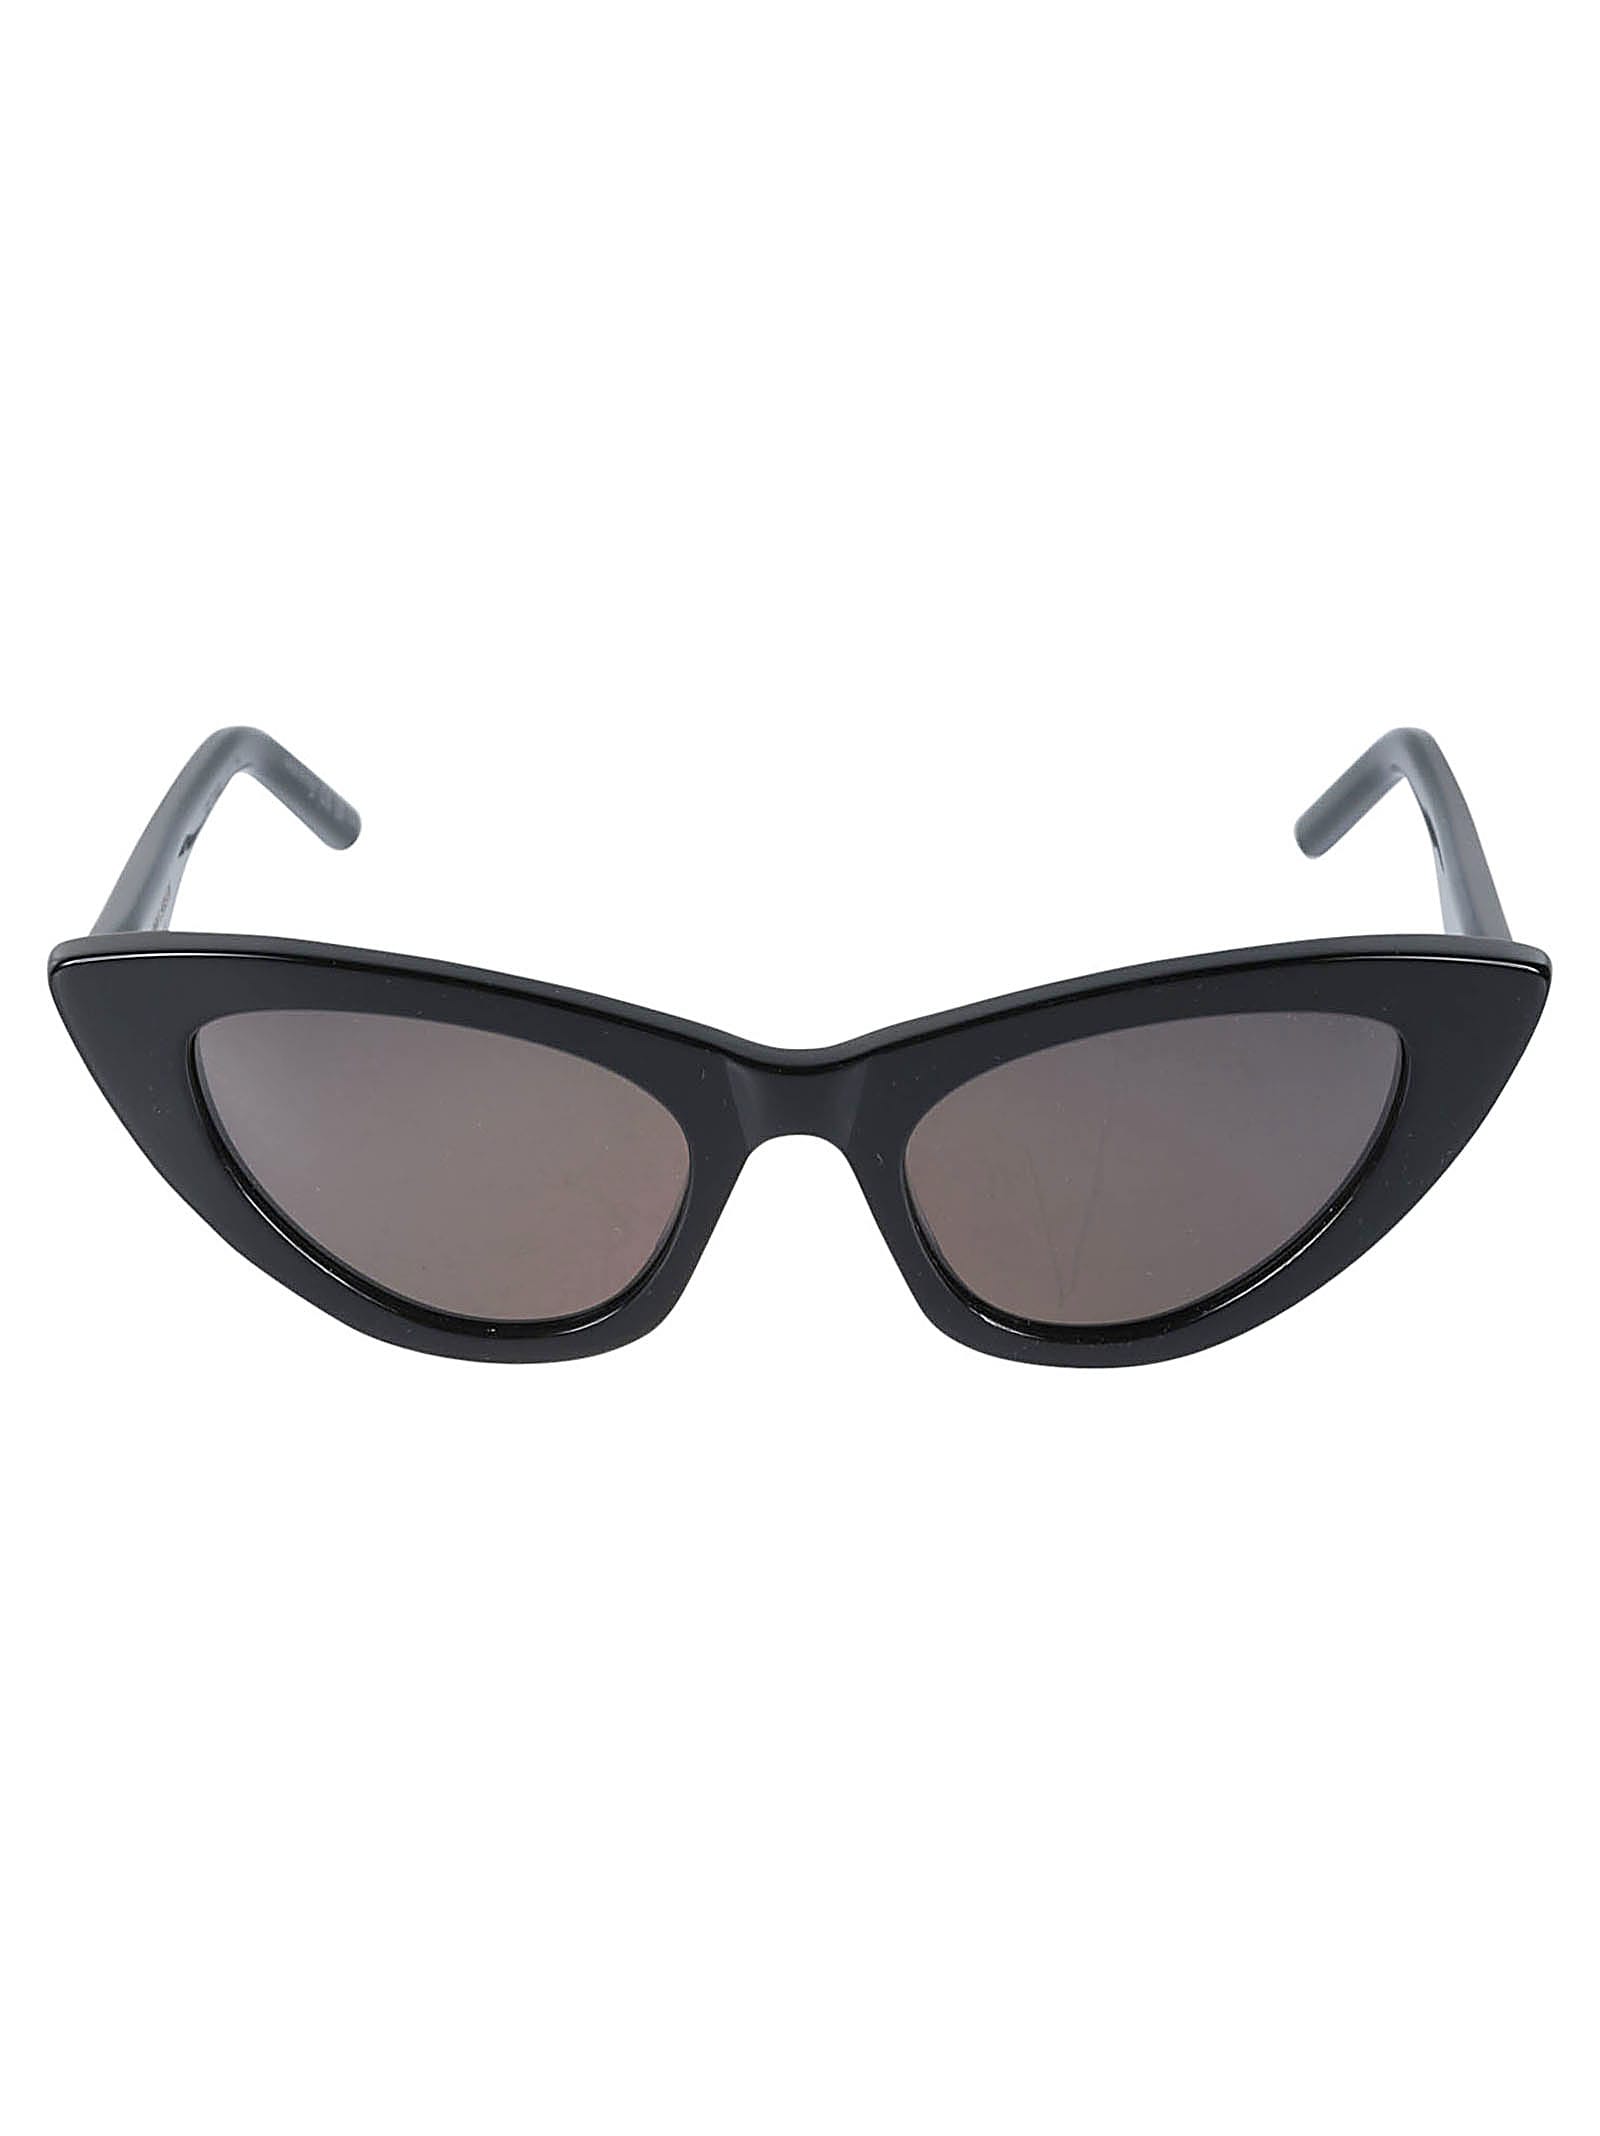 Saint Laurent Lily Sunglasses In Black/grey